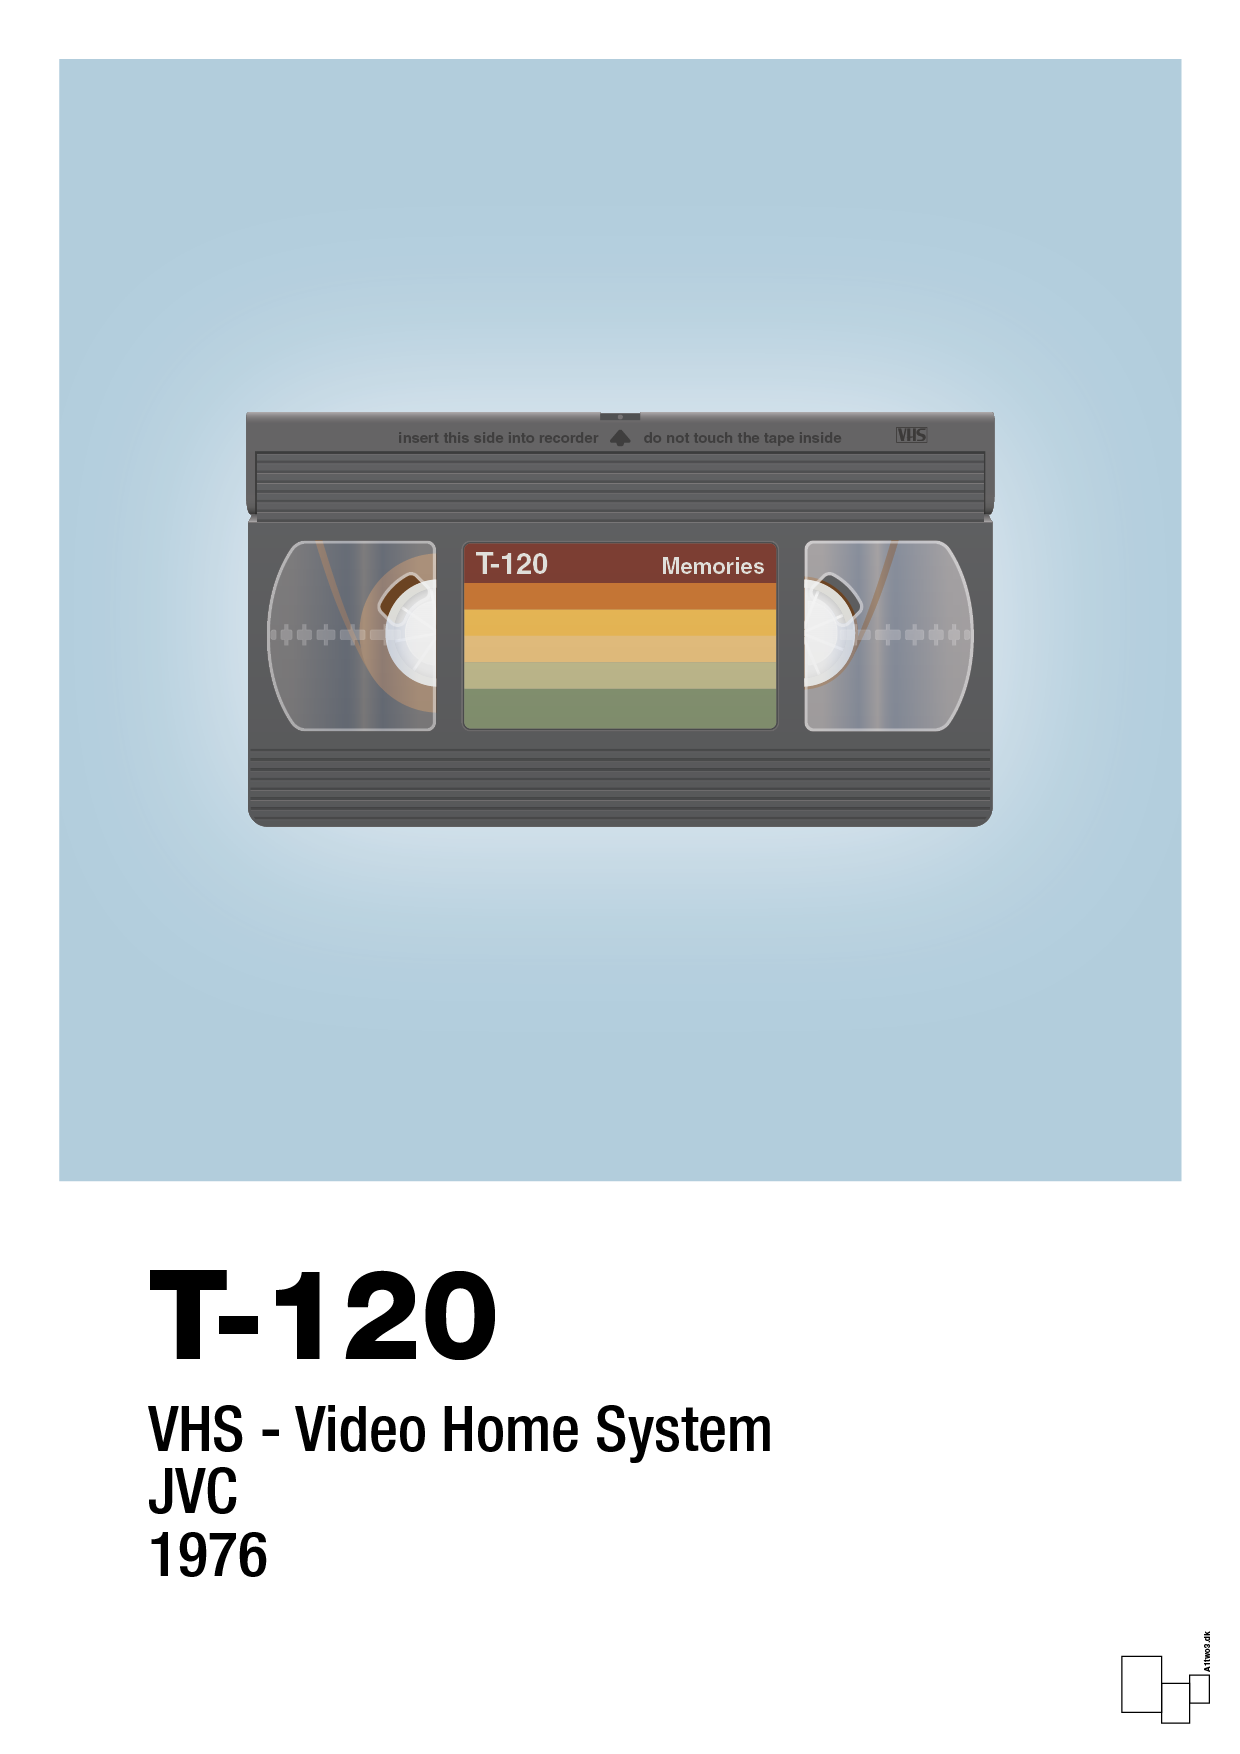 videobånd t-120 - Plakat med Grafik i Heavenly Blue